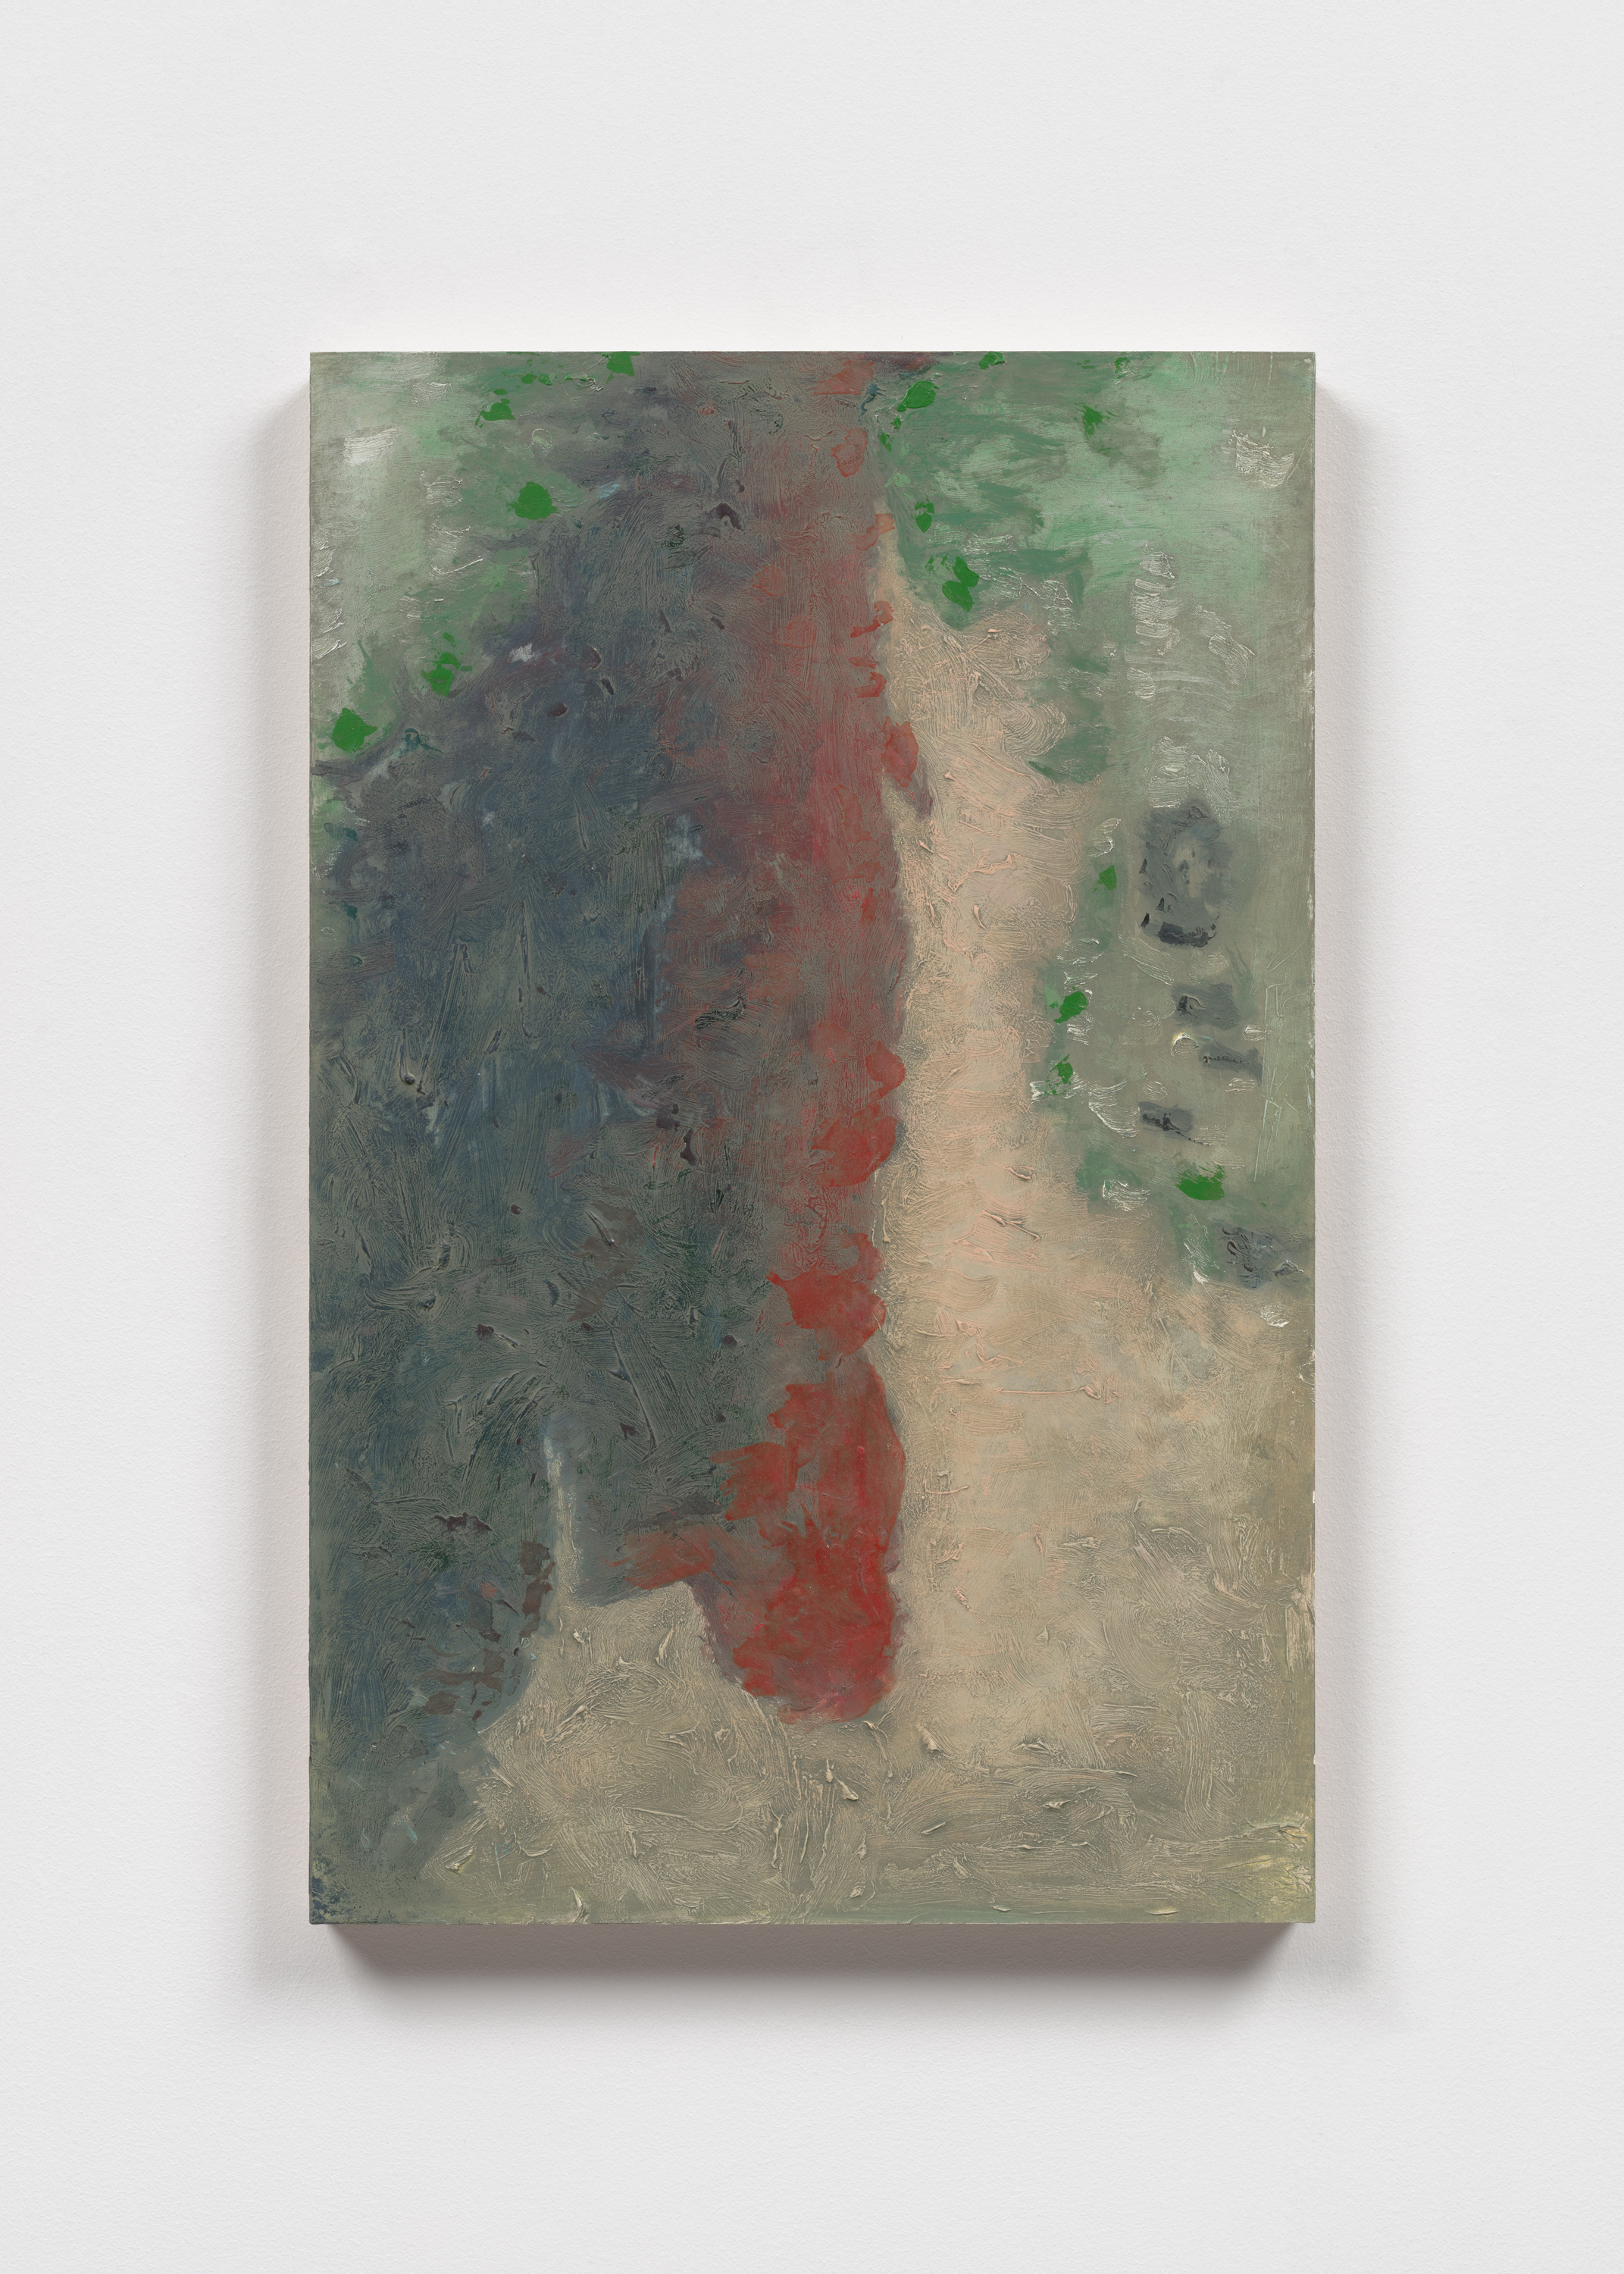 Richard Aldrich, Untitled (Symbolist), 2018–19, oil and wax on panel, 20 1/2 x 21 x 5".